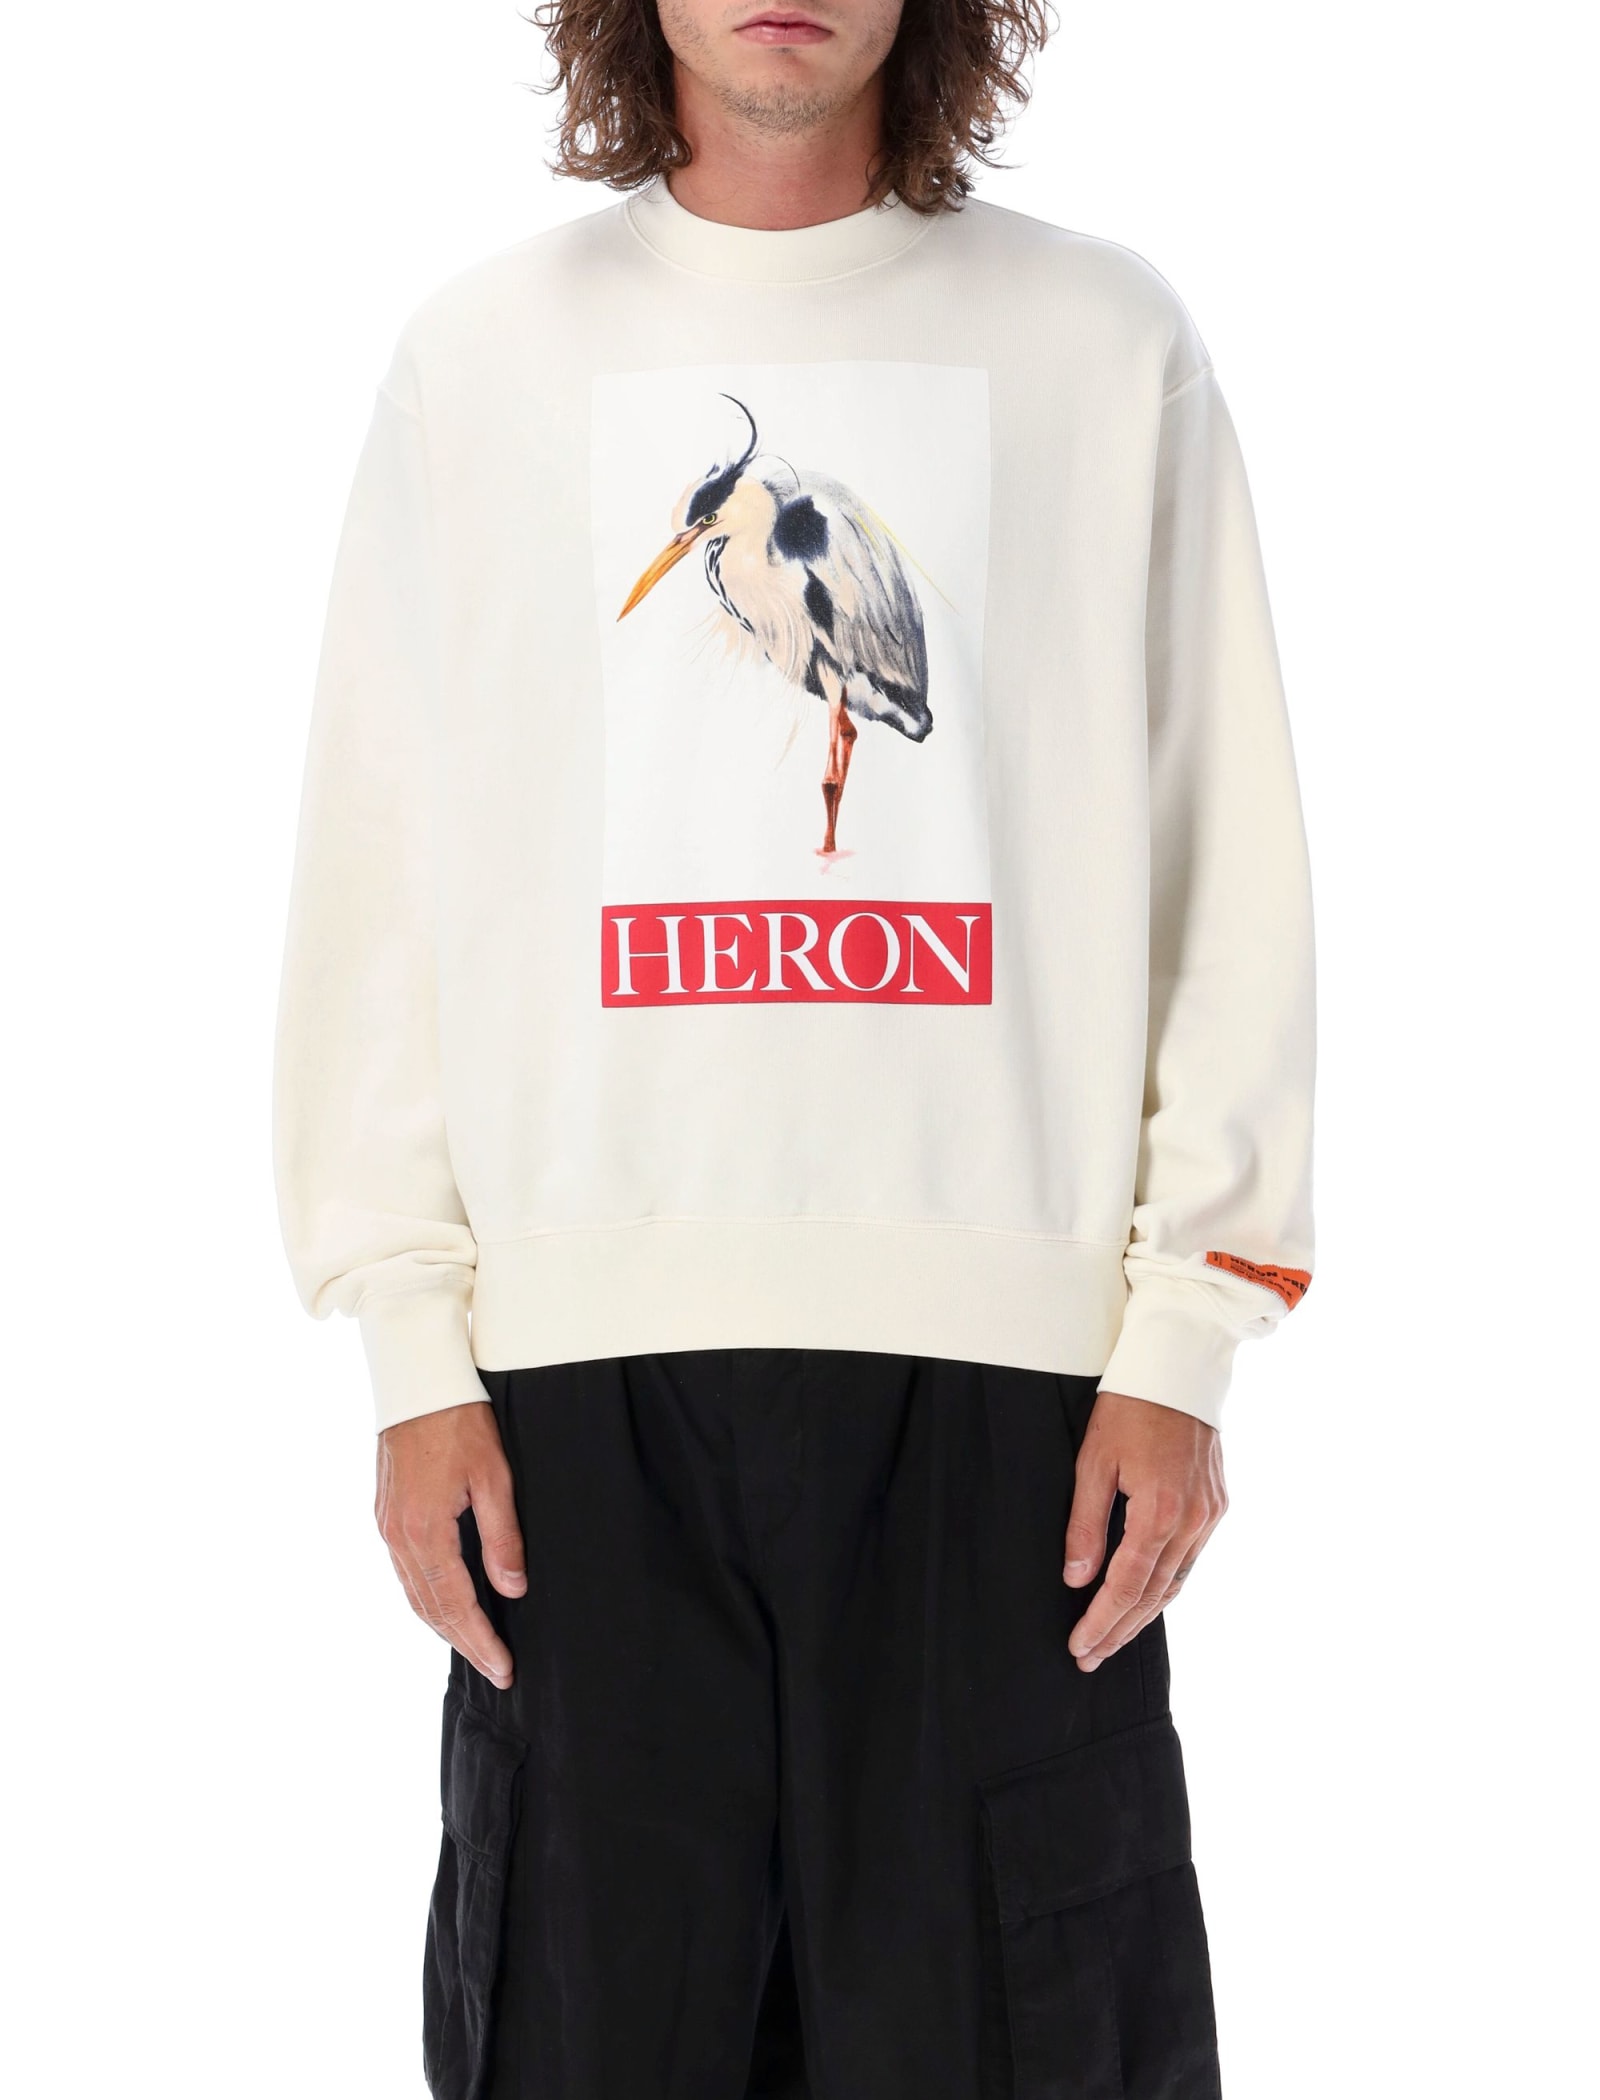 HERON PRESTON HERON BIRD PAINTED CREWNECK